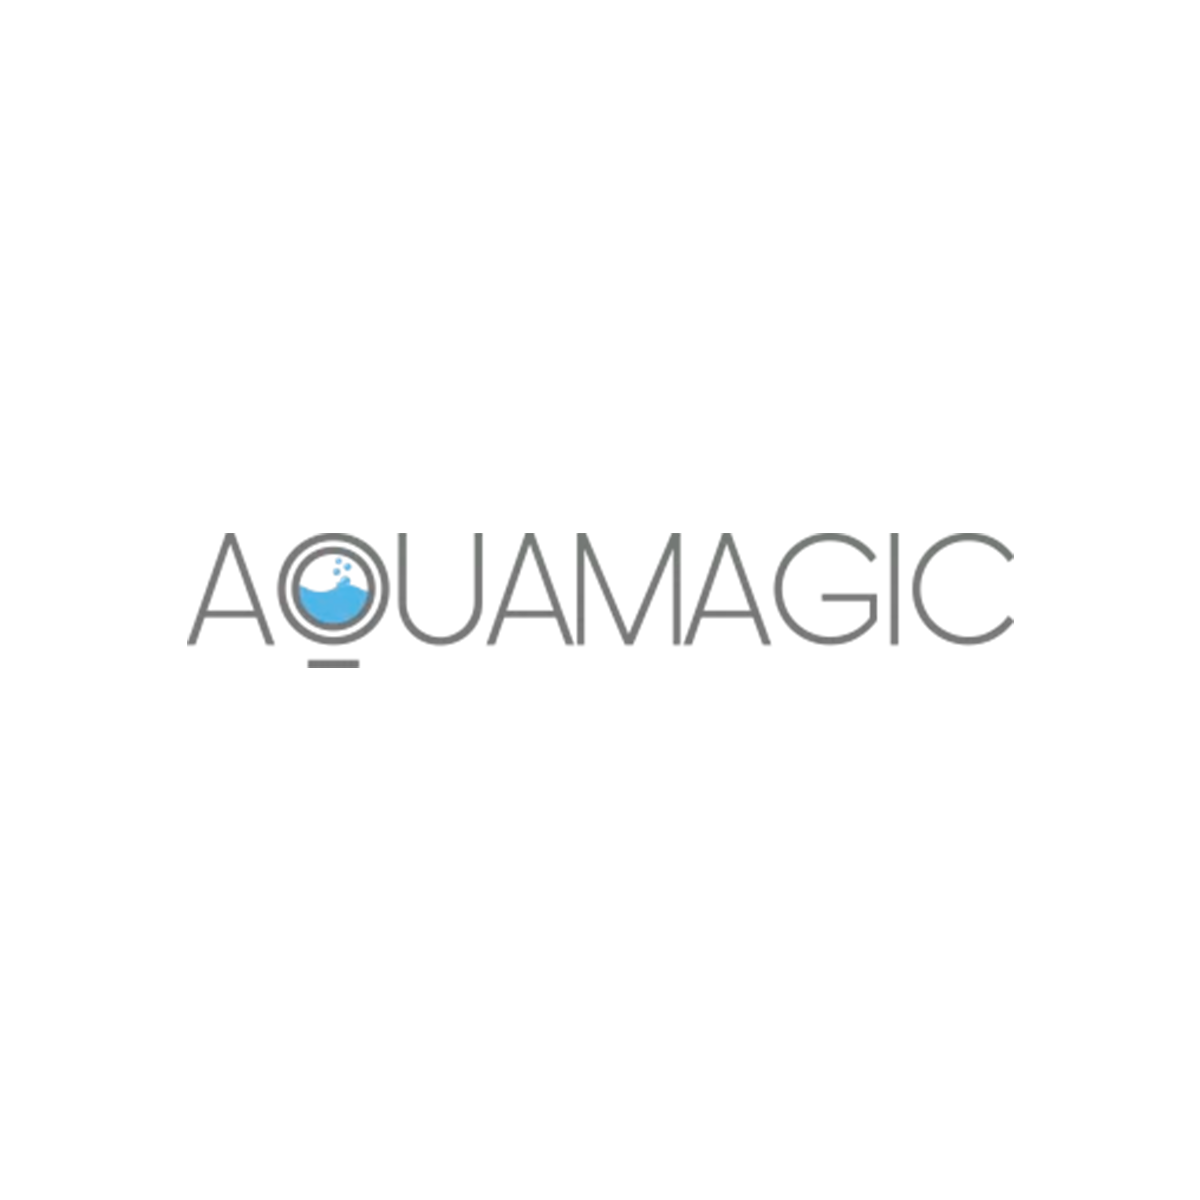 Aquamagic